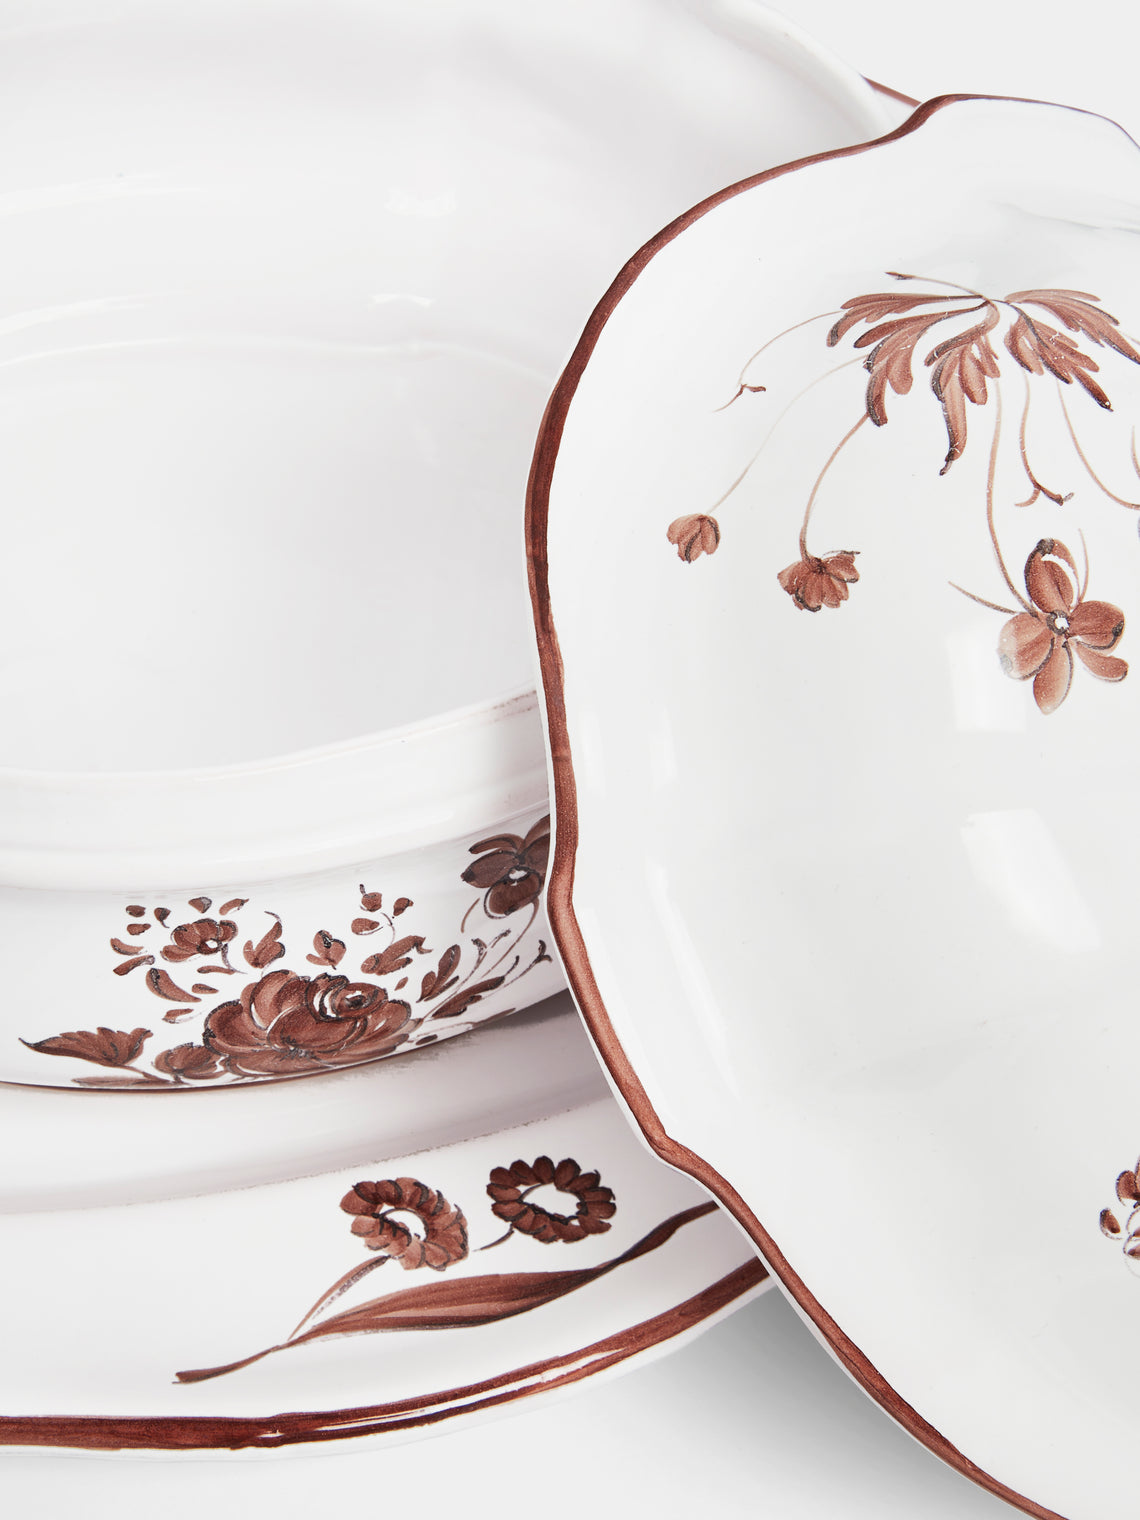 Z.d.G - Camaïeu Hand-Painted Ceramic Lidded Tureen with Serving Platter - Brown - ABASK